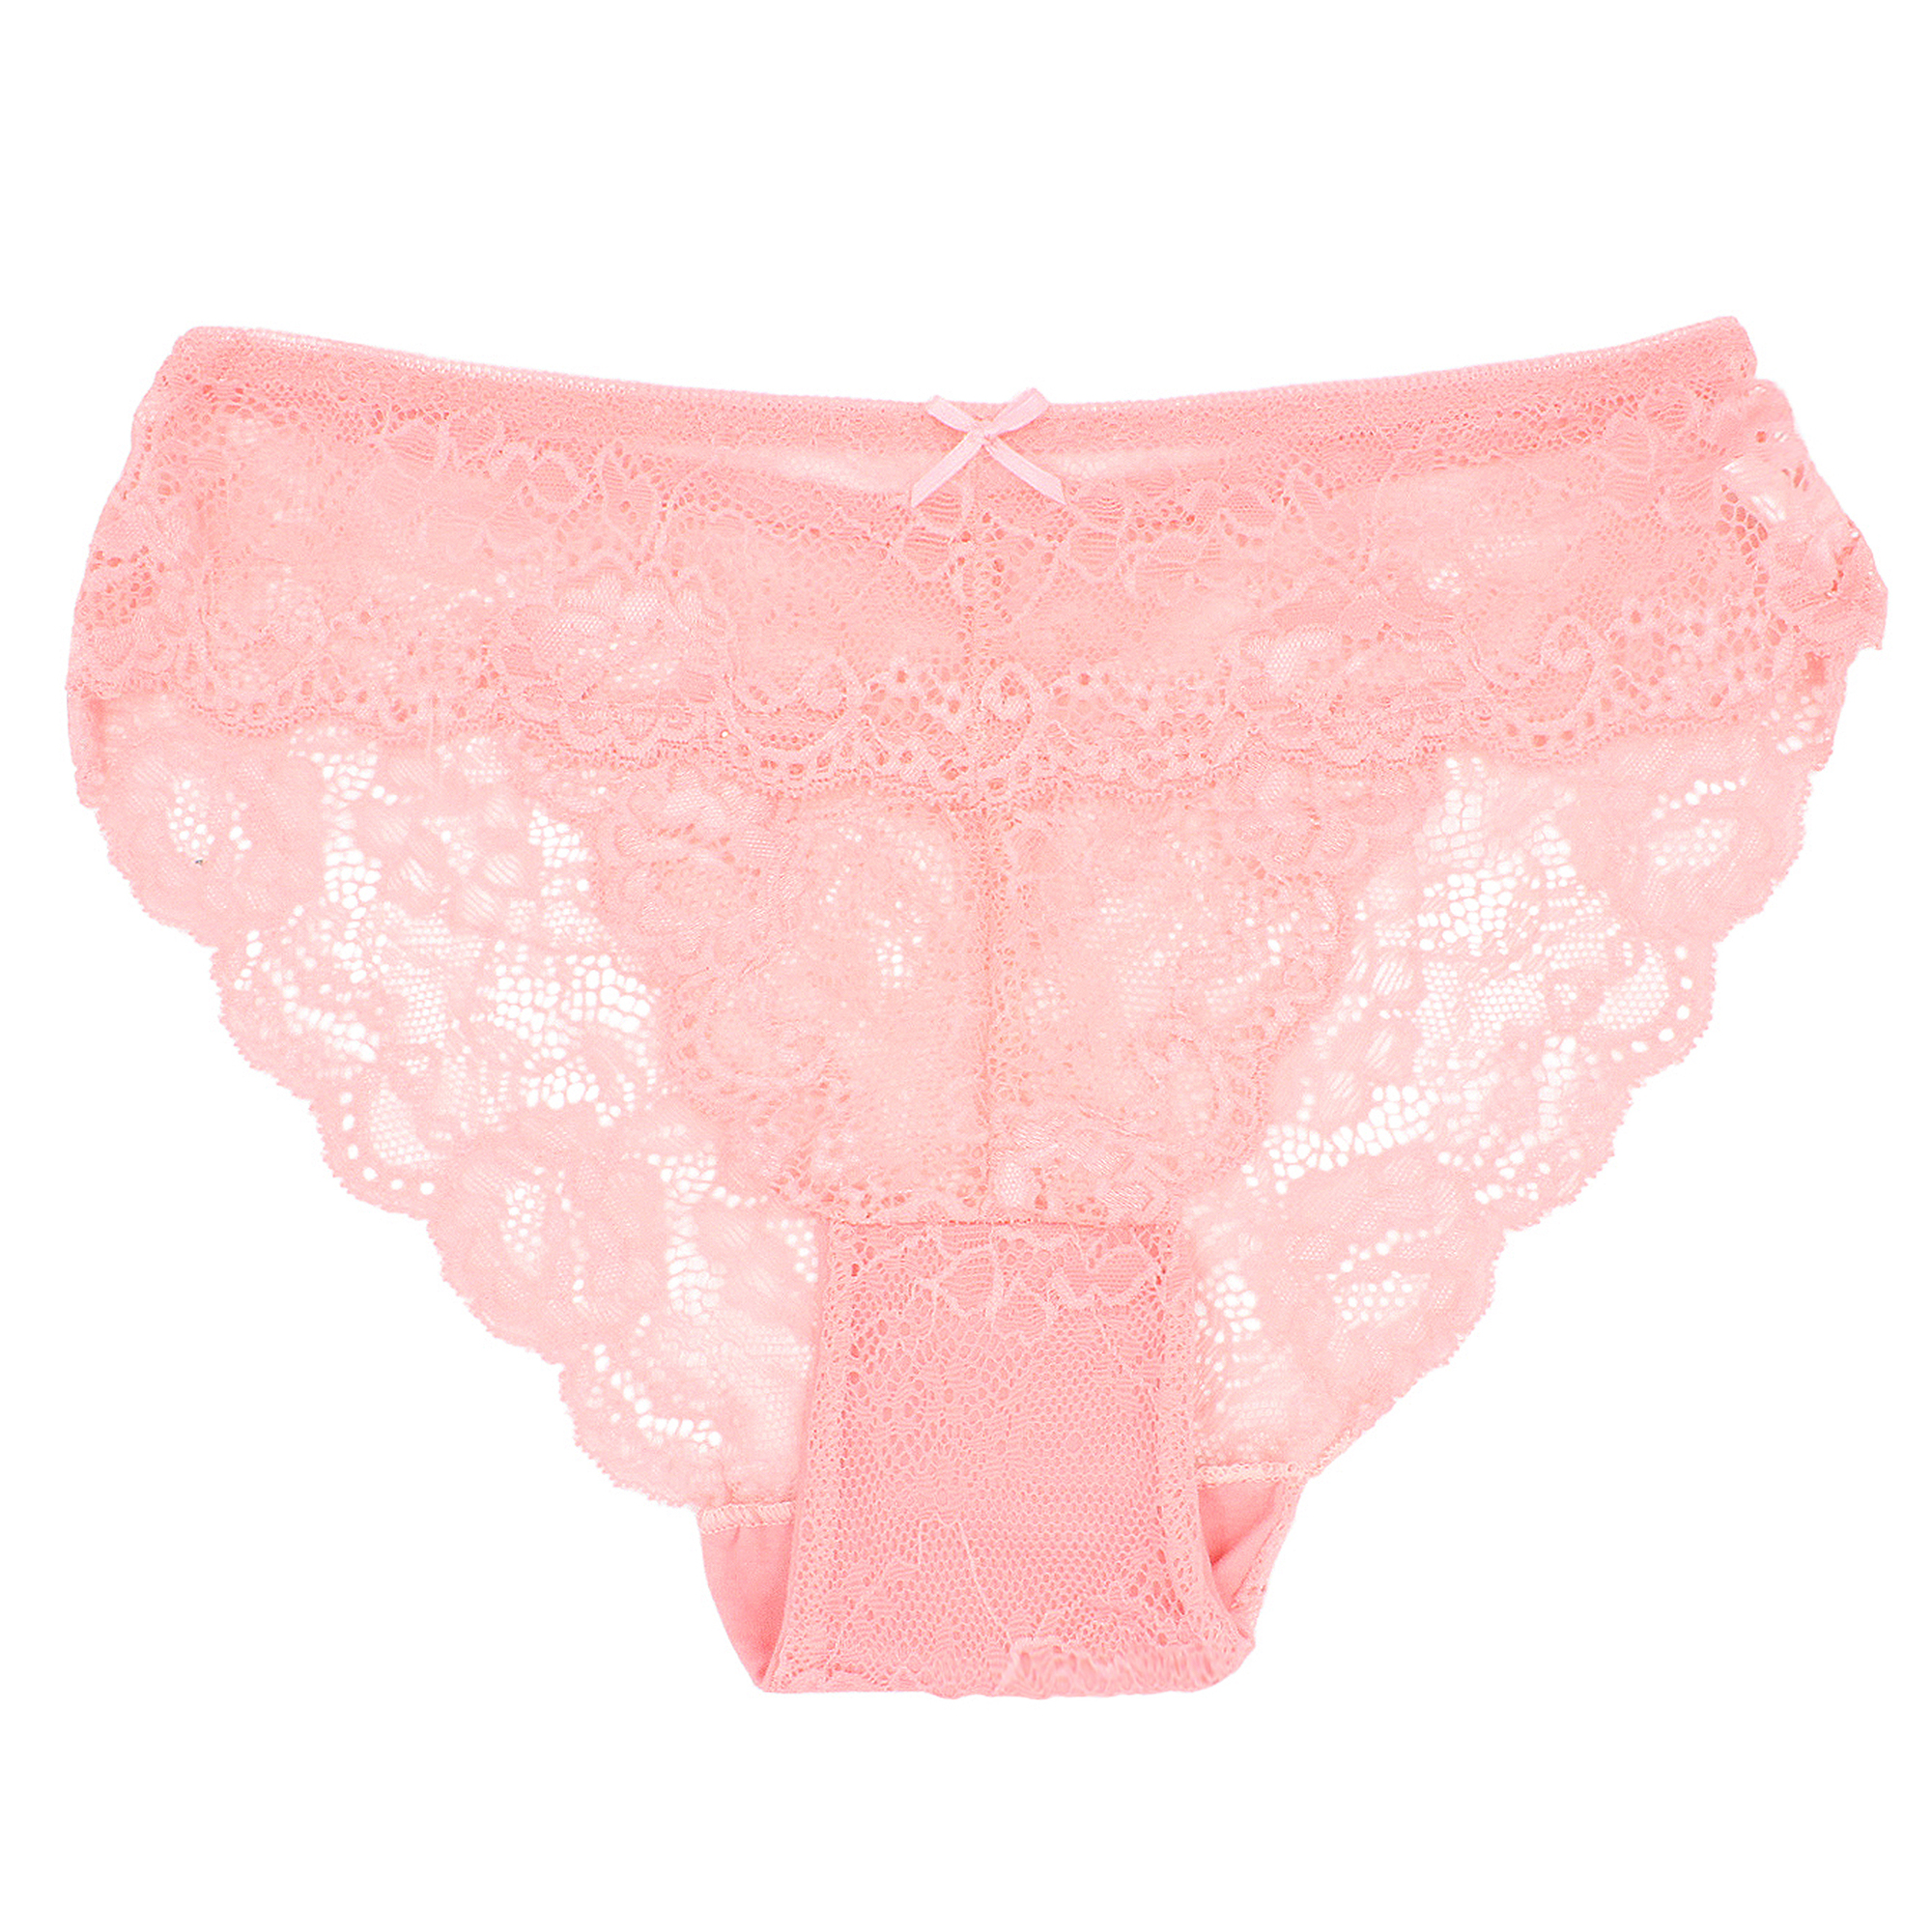 NEW]6 Pack of Women's Panties Sexy Lace Underwear Set Boyshorts